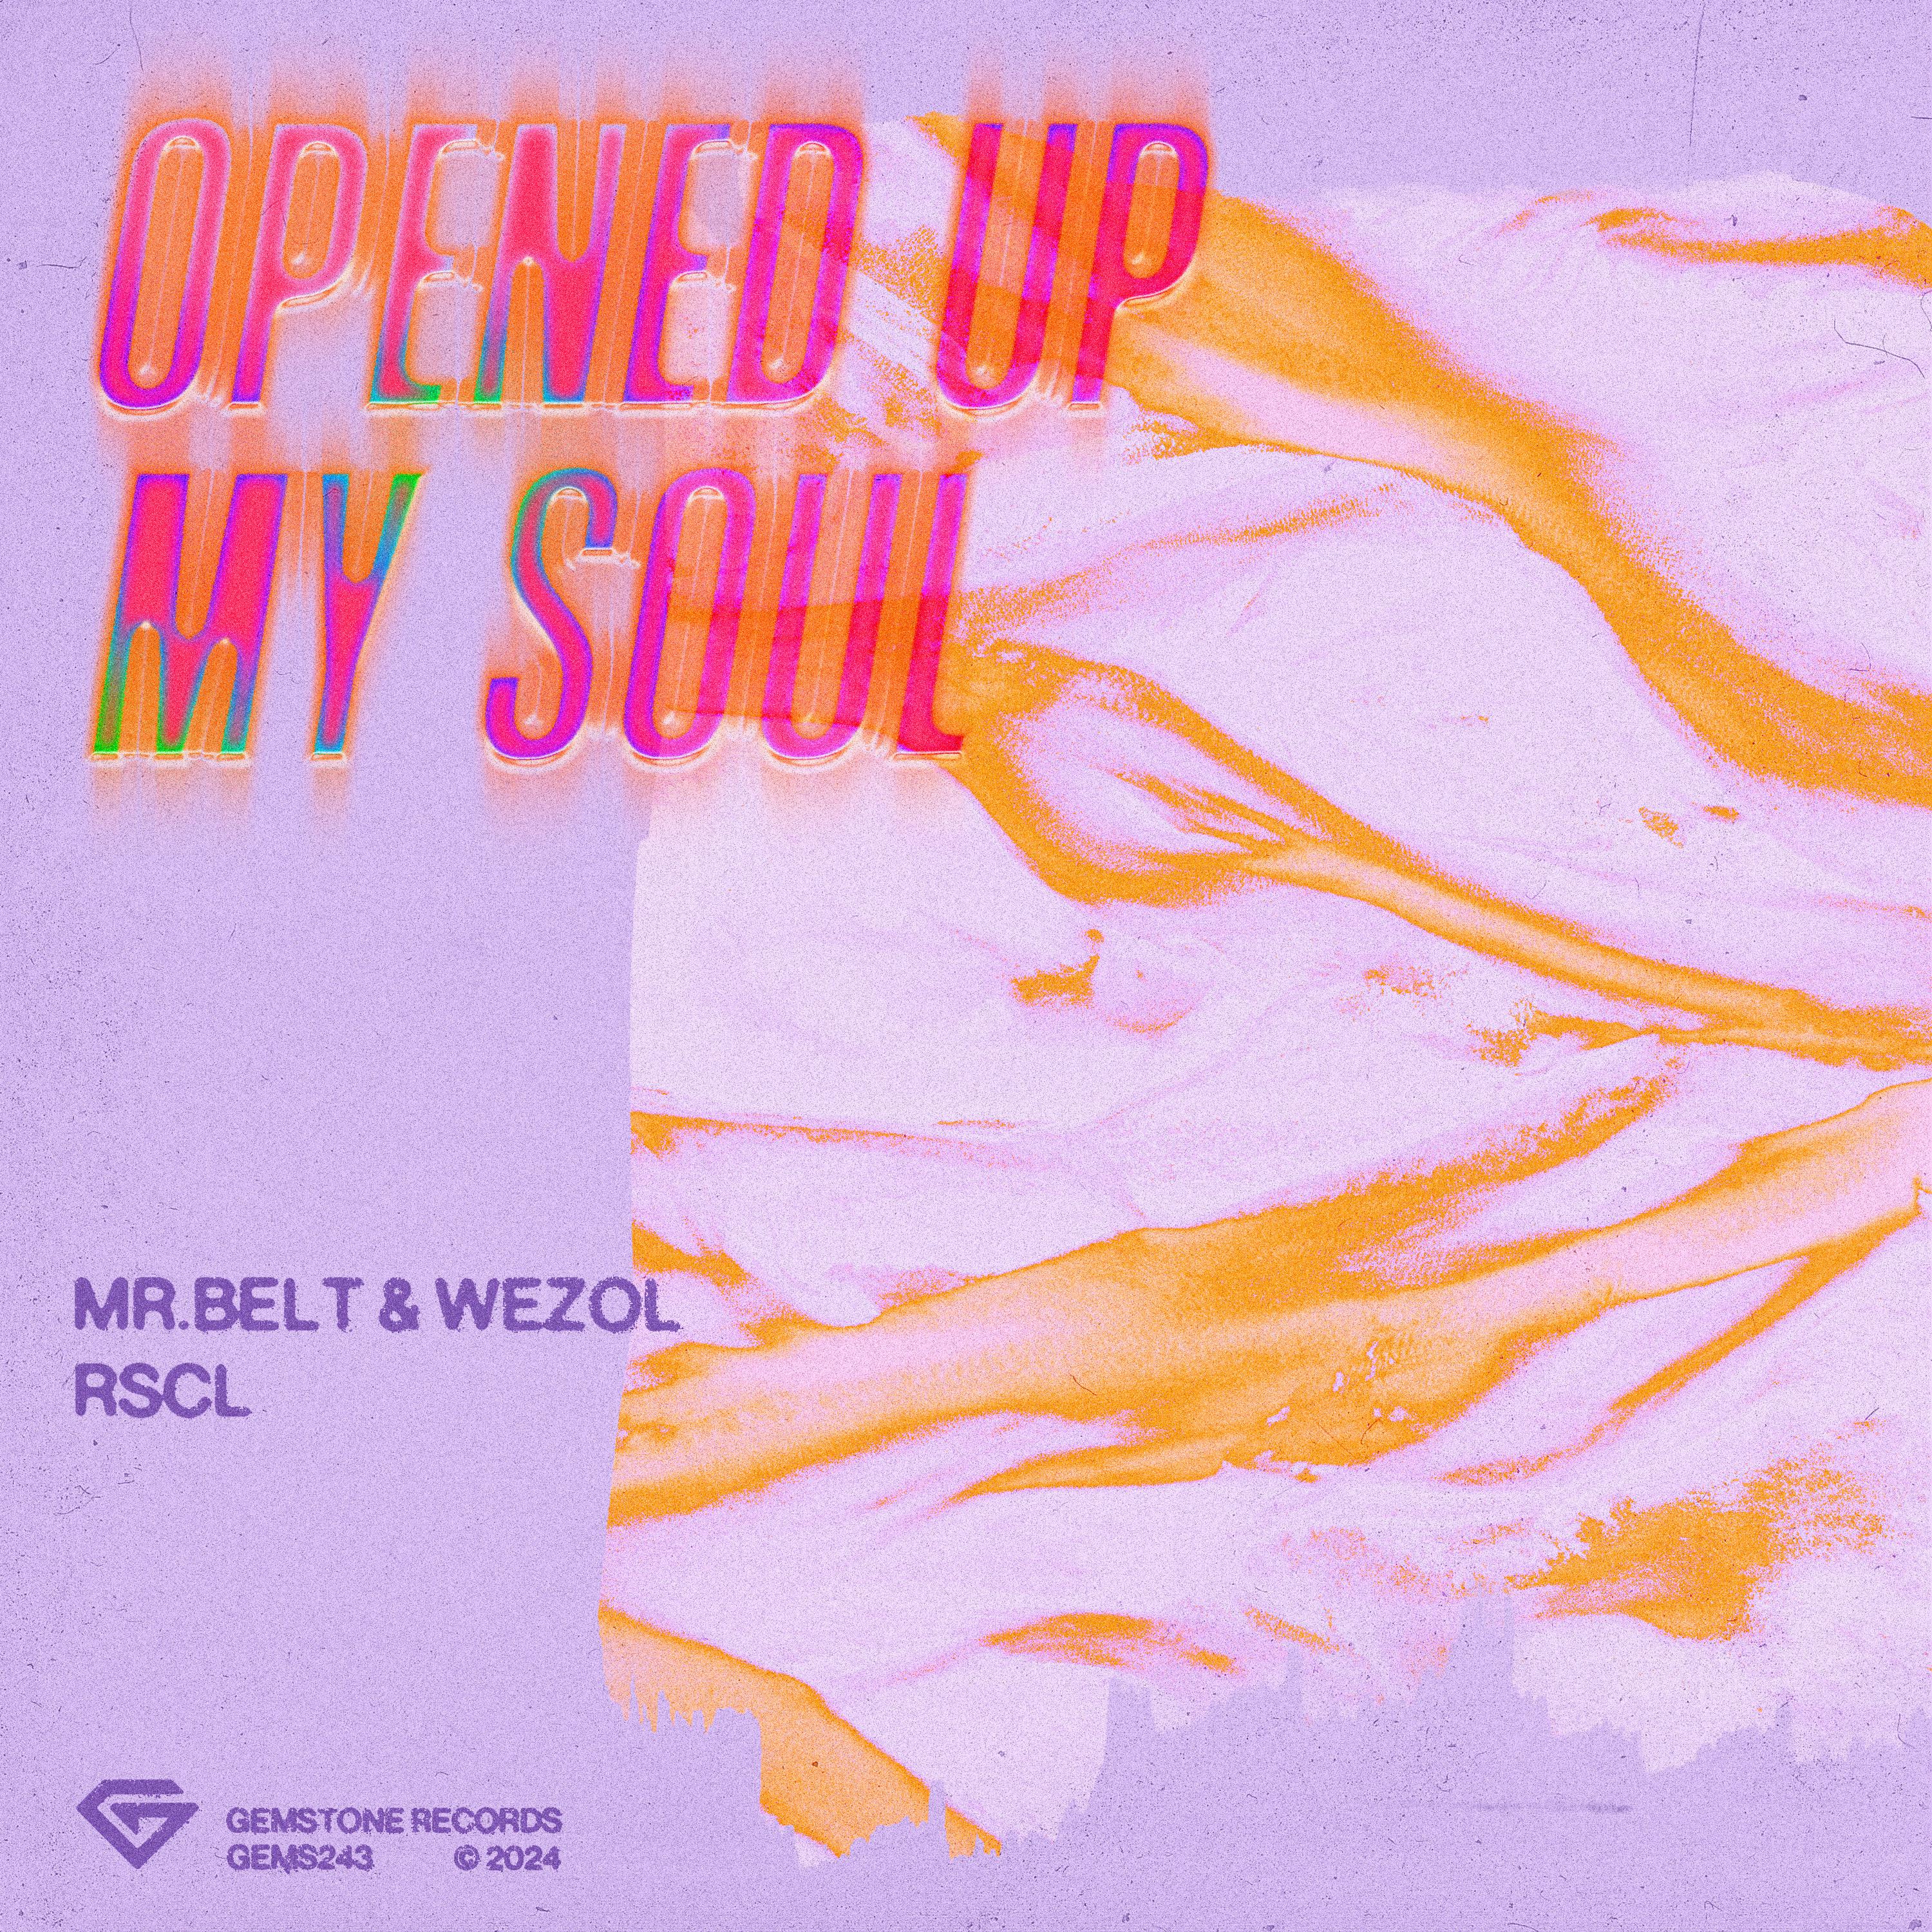 Mr. Belt & Wezol - Opened Up My Soul